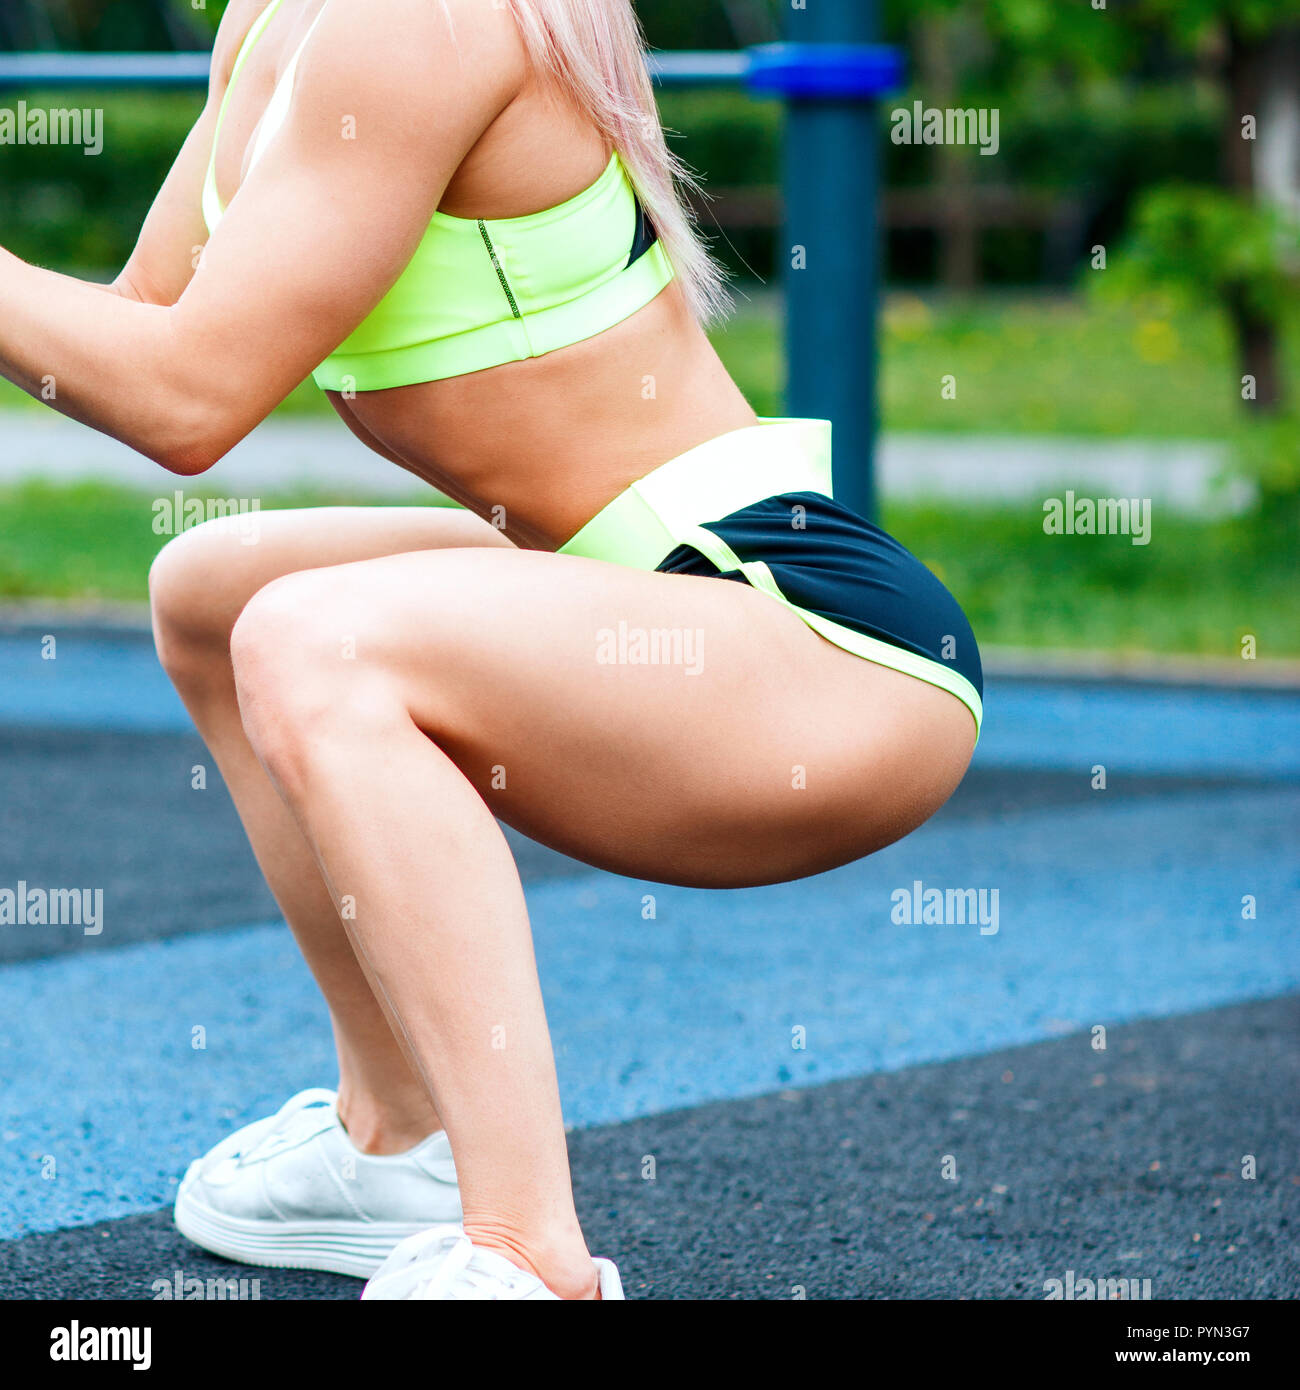 Sport ragazza in sportswear squatting in estate park. Foto Stock